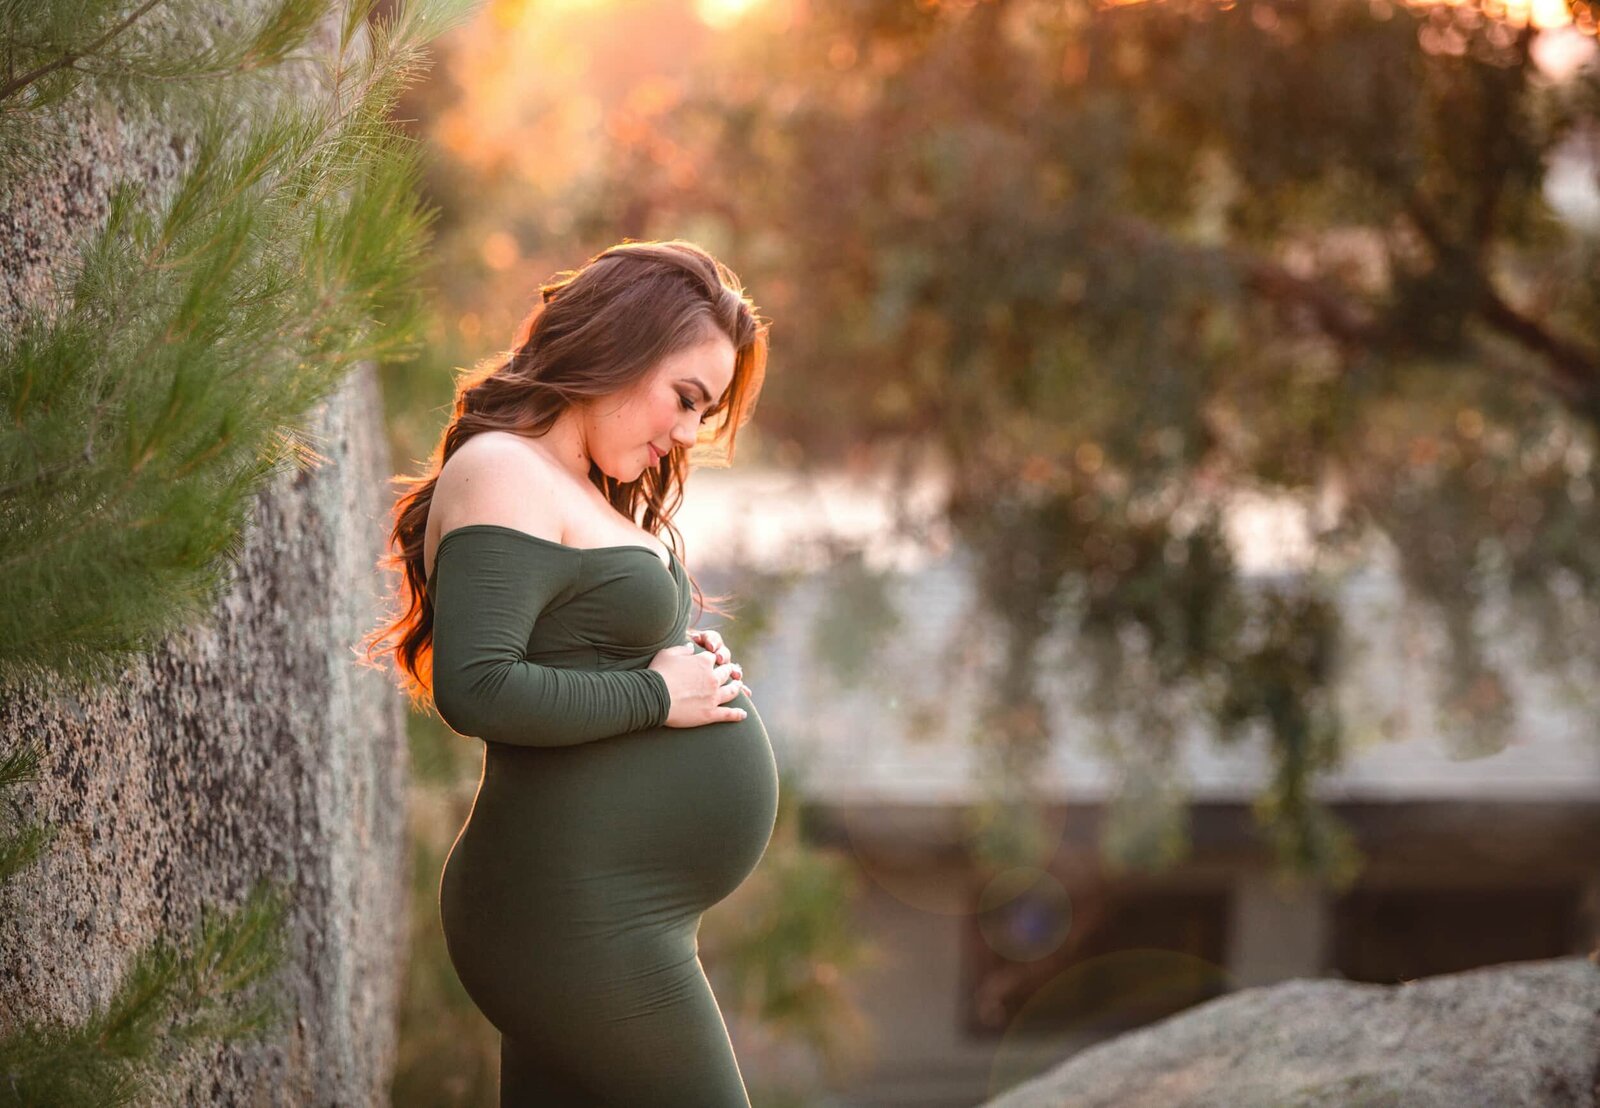 Maternity portrait outdoors in green dress